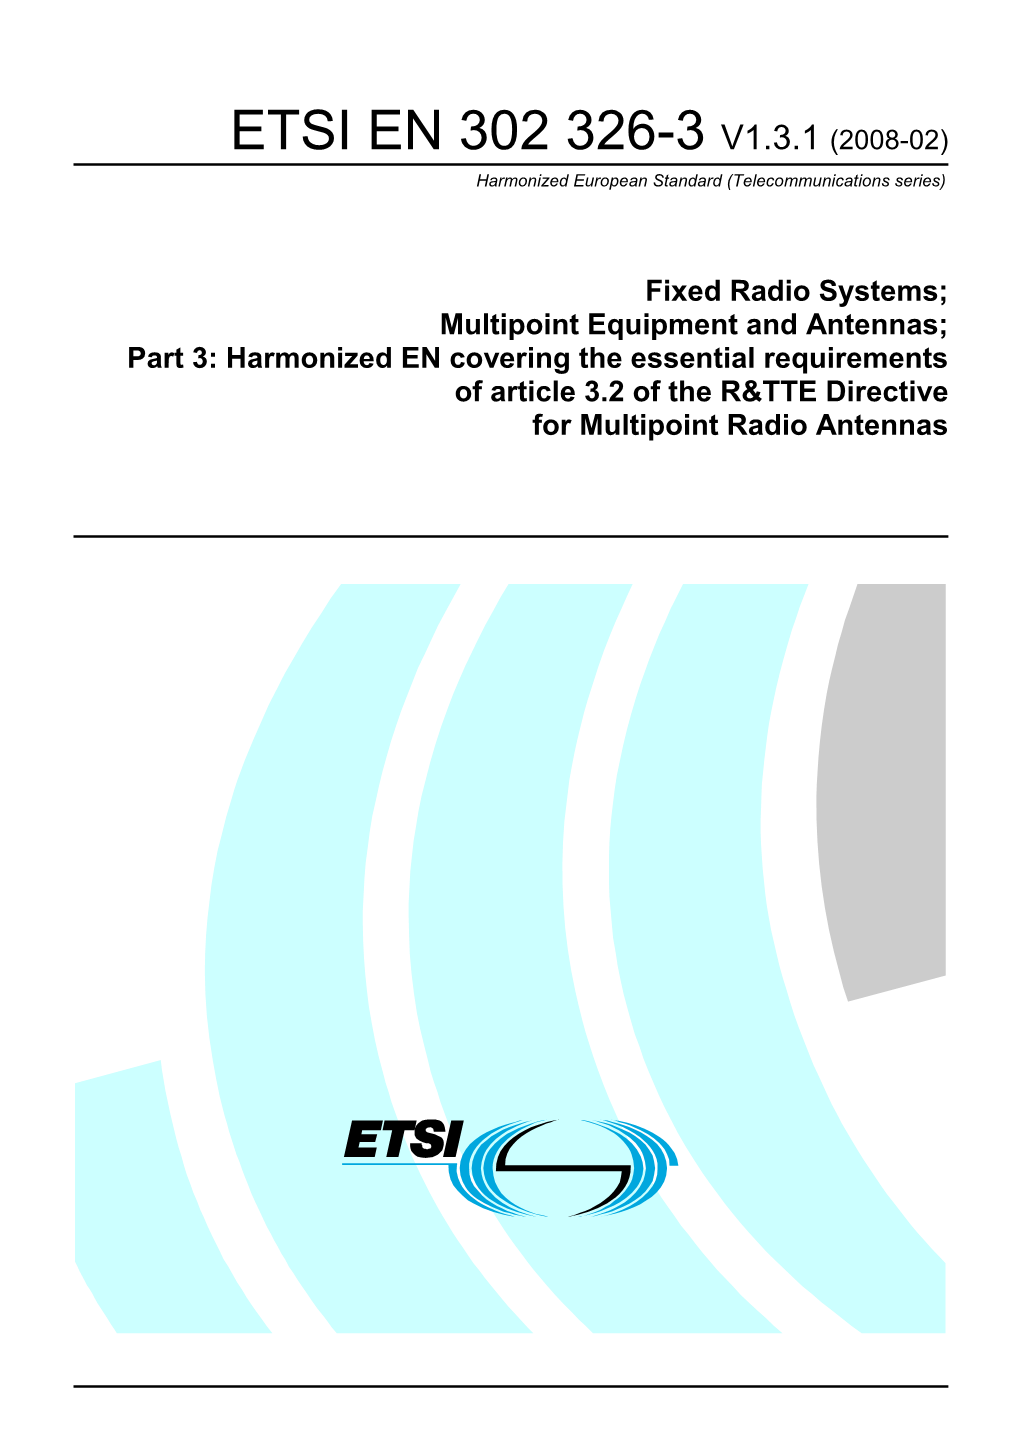 ETSI EN 302 326-3 V1.3.1 (2008-02) Harmonized European Standard (Telecommunications Series)